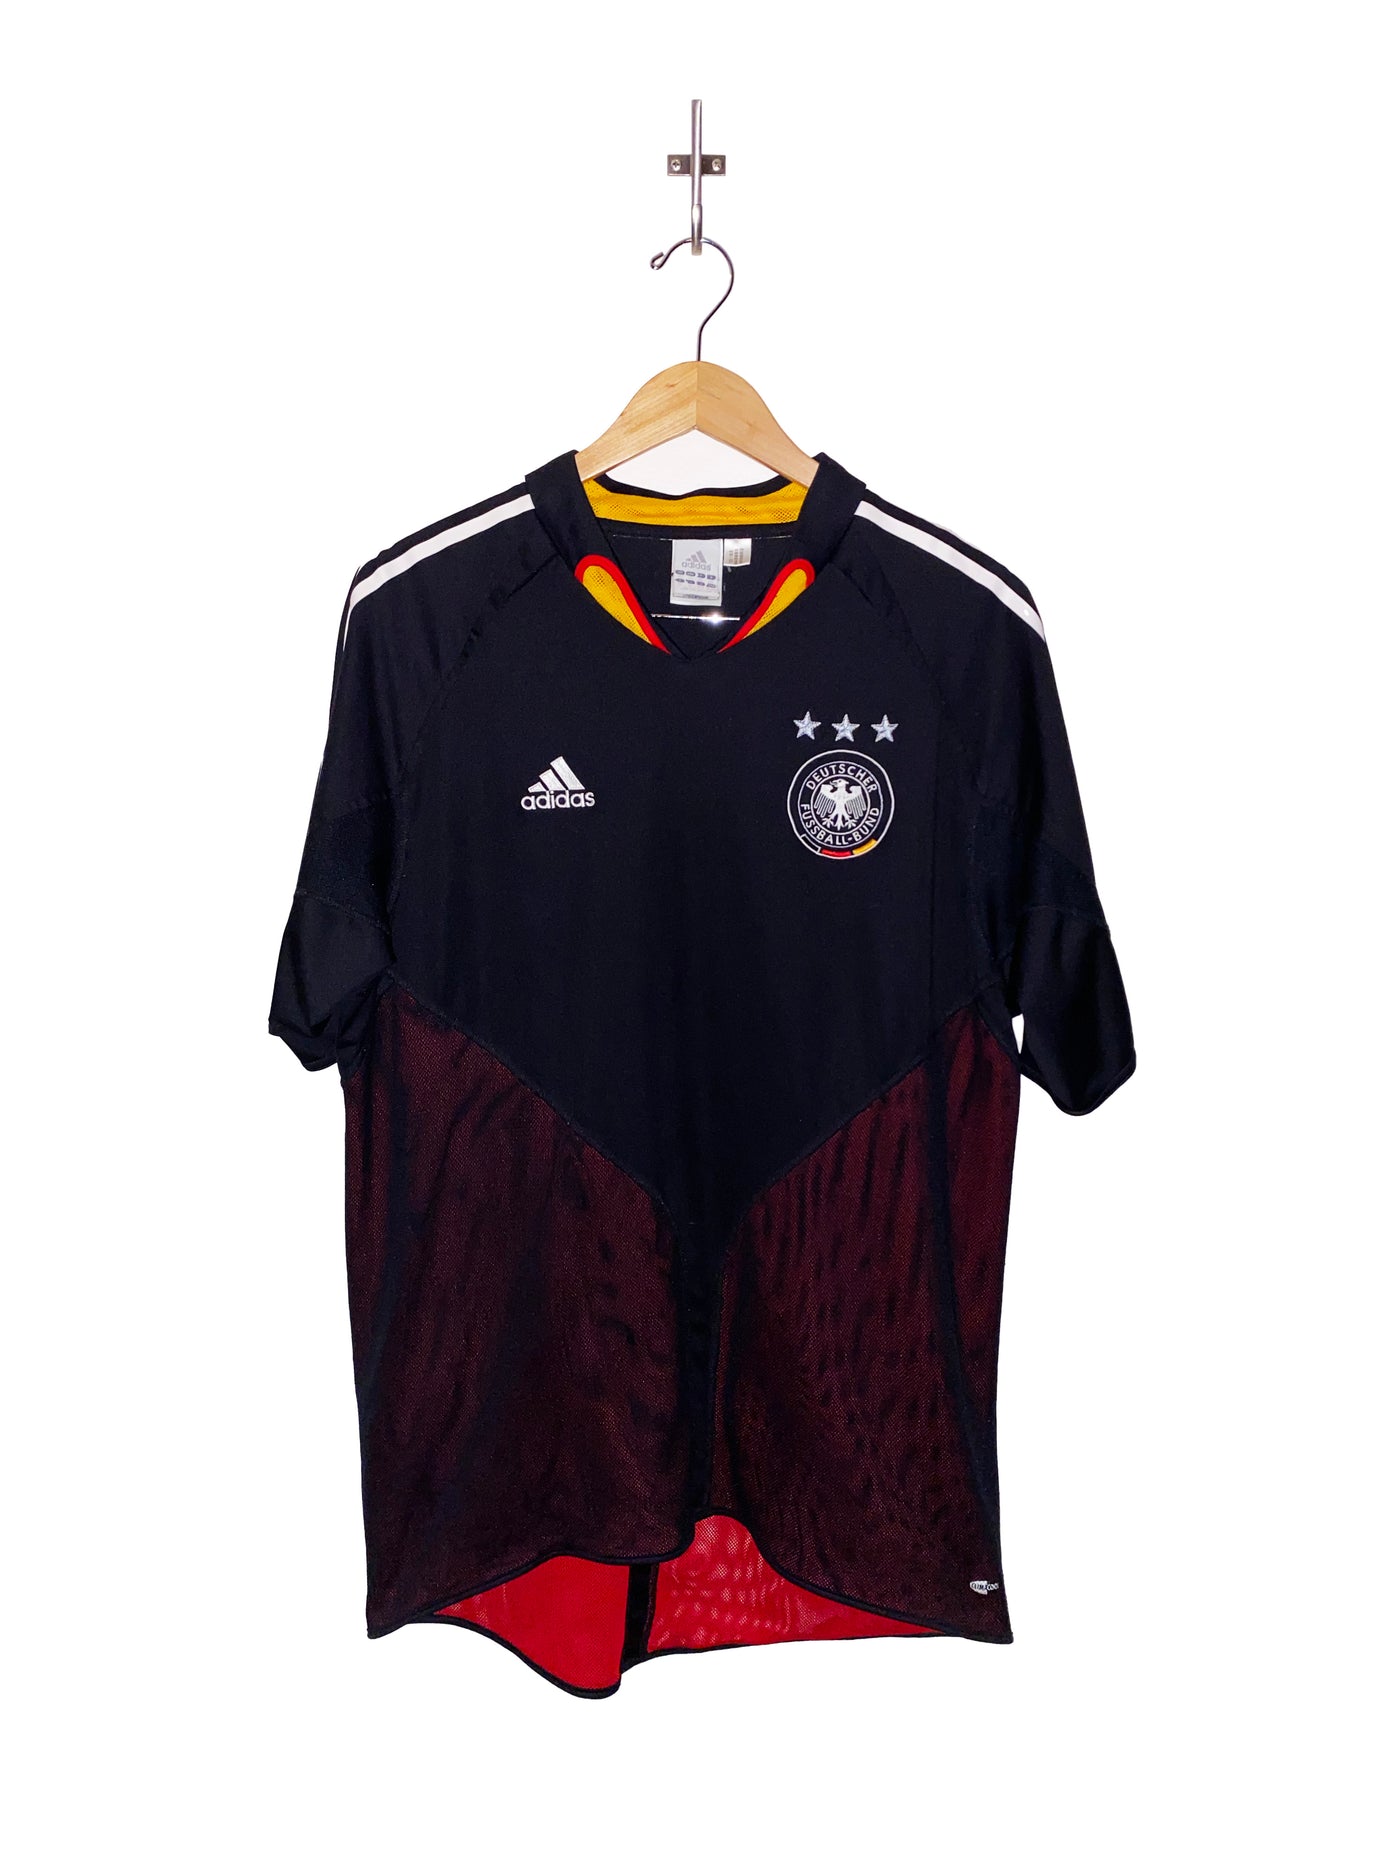 Adidas Germany Men's Soccer Jersey